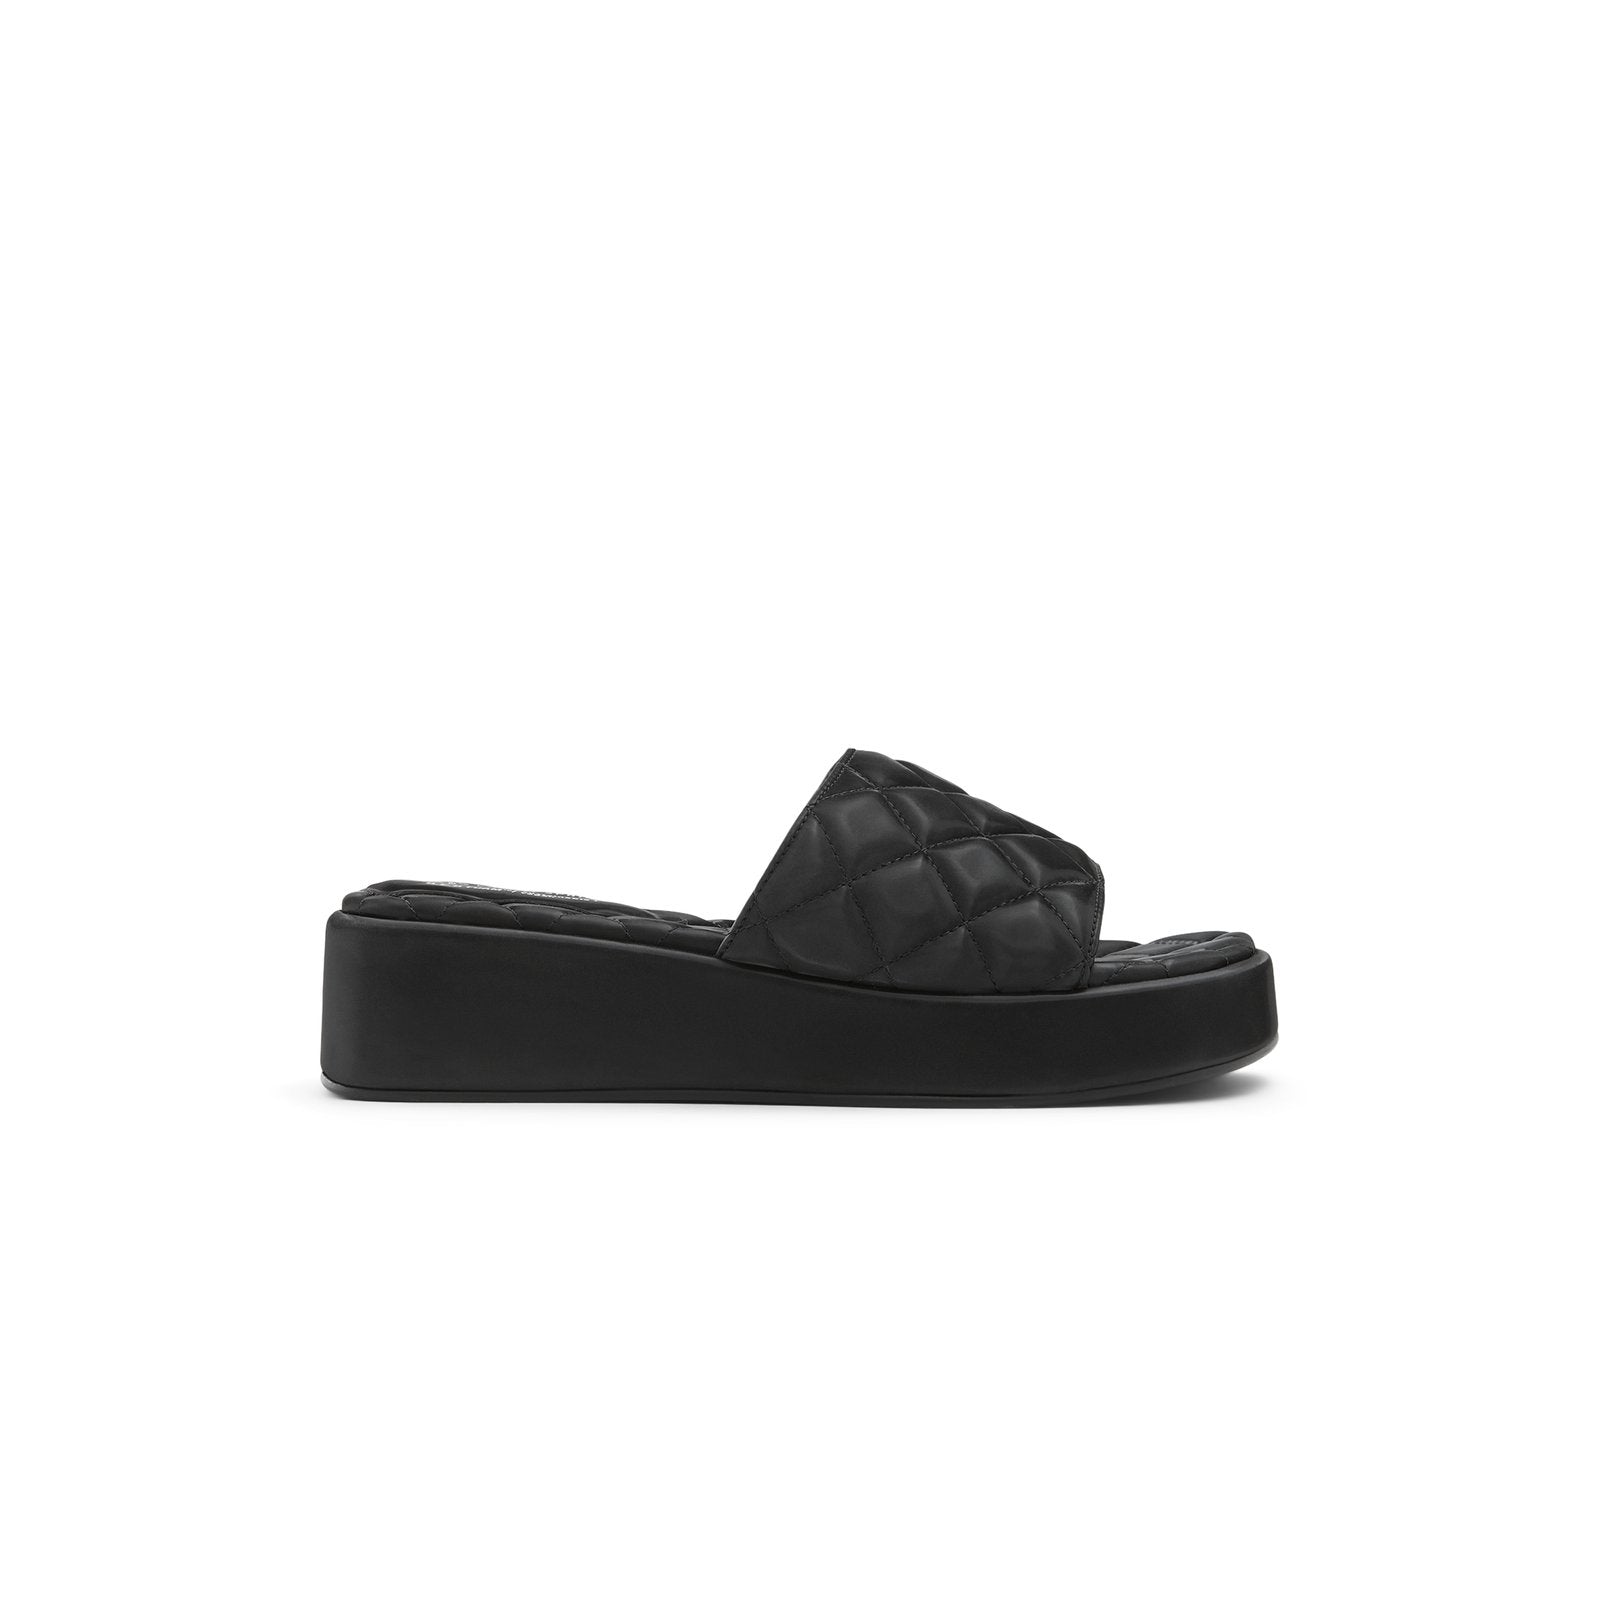 Nalaa / Wedge Sandals Women Shoes - Black - CALL IT SPRING KSA